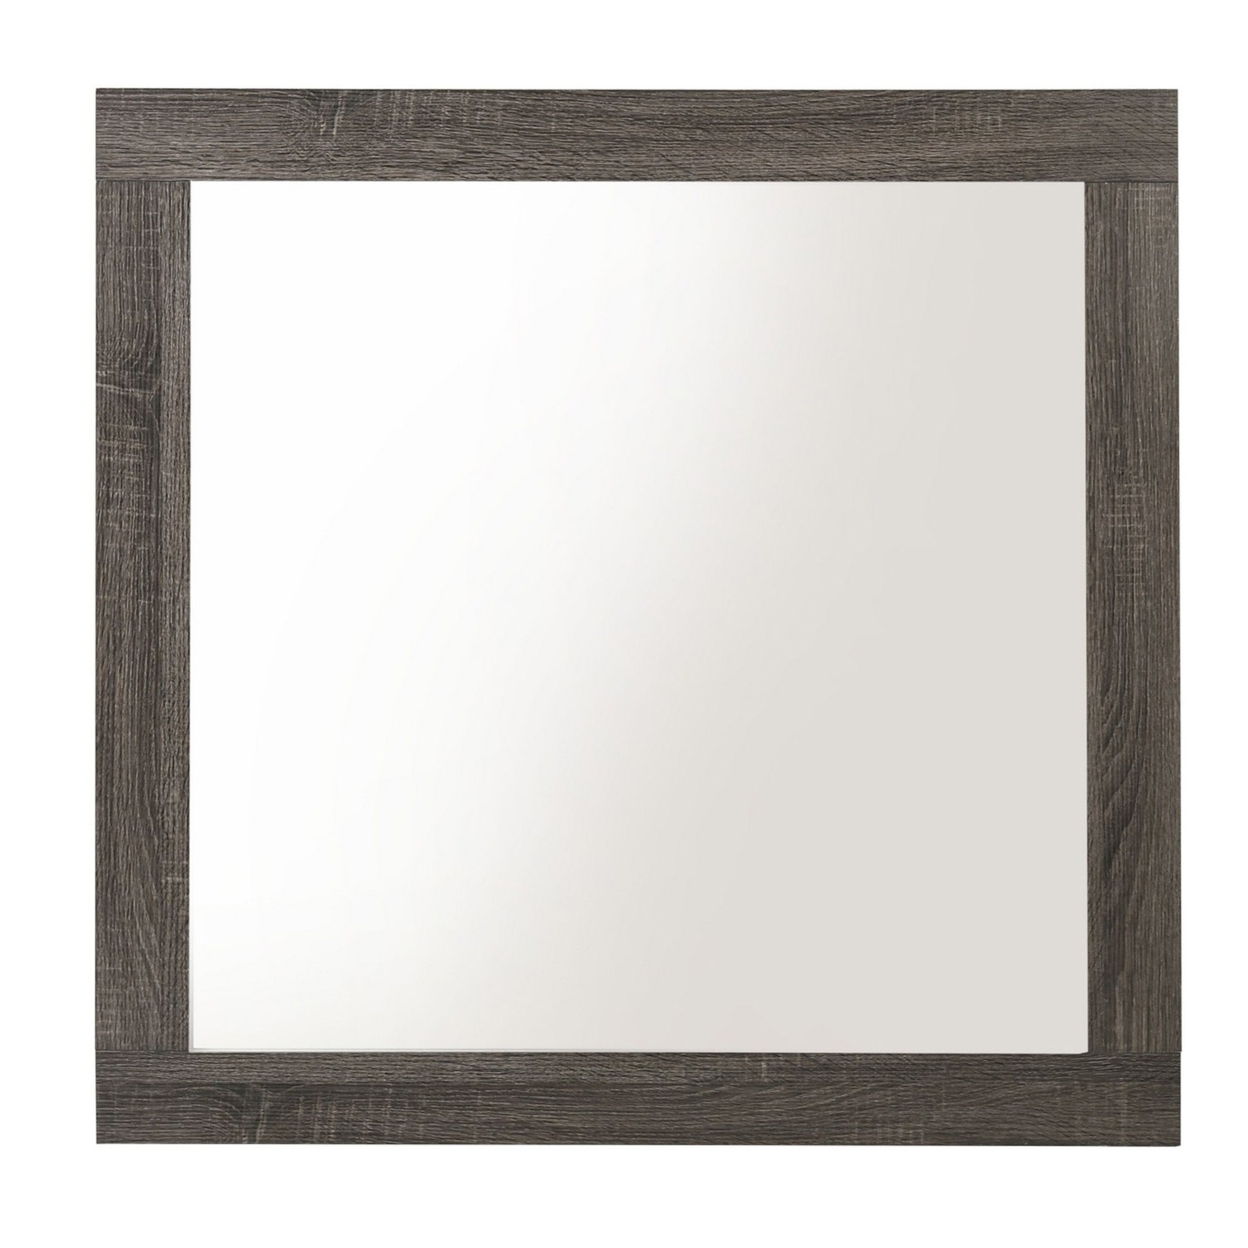 Transitional Style Rectangular Mirror With Natural Wood Grain Details, Gray- Saltoro Sherpi